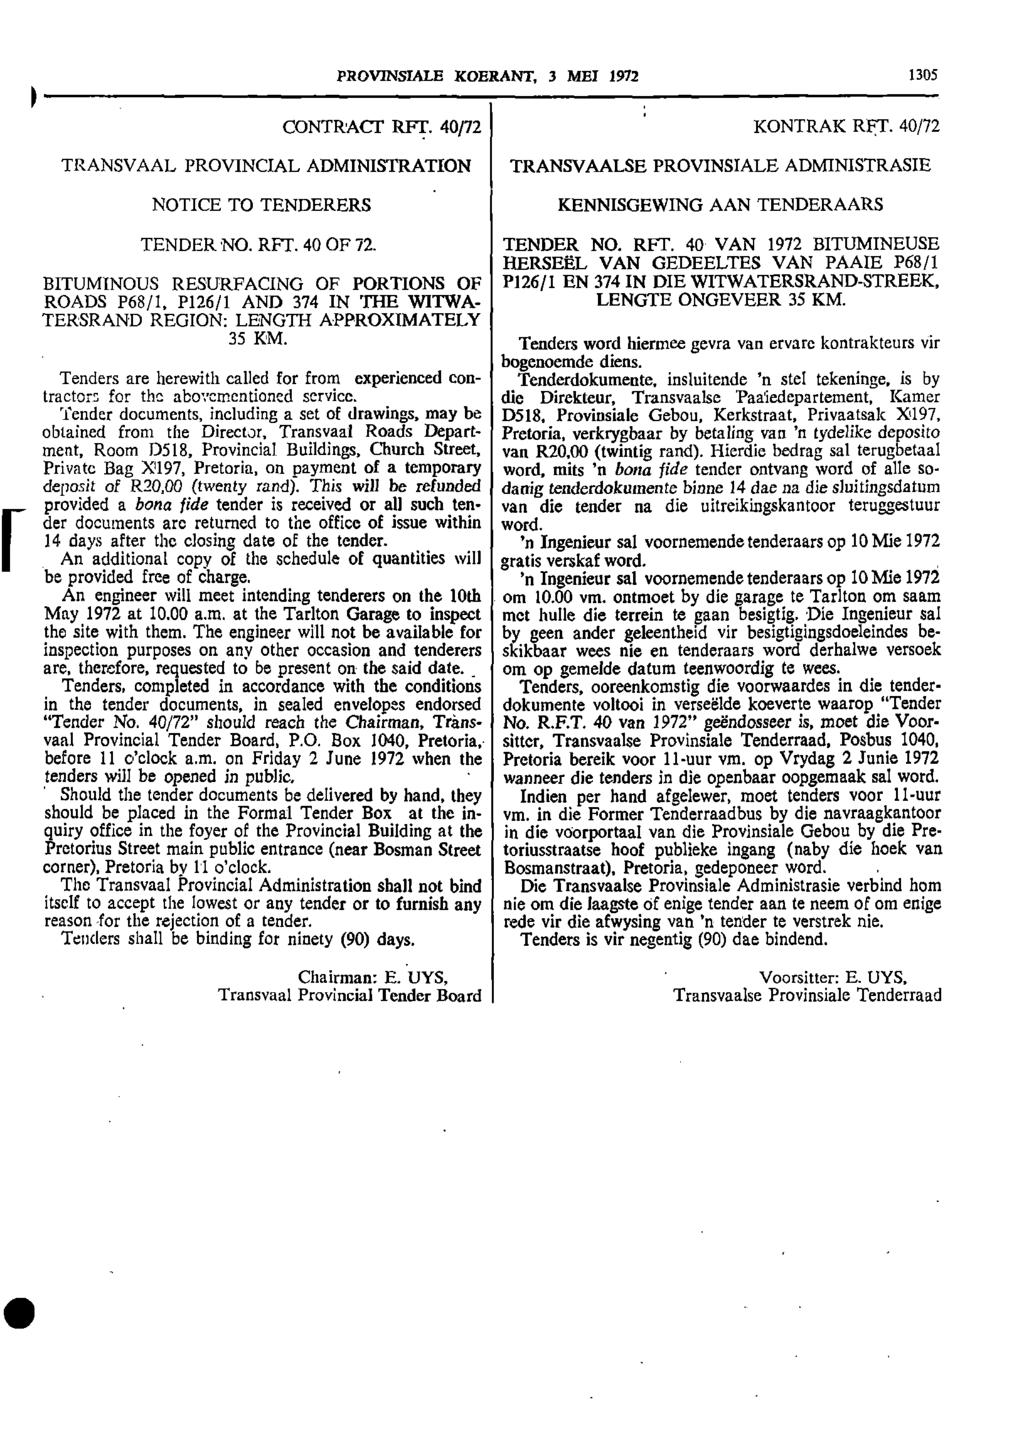 PROVINSIALE KOERANT, 3 MEI 1972 1305 CONTRACT RFT 40/72 KONTRAK RFT 40/72 TRANSVAAL PROVINCIAL ADMINISTRATION NOTICE TO TENDERERS TRANSVAALSE PROVINSIALE ADMINISTRASIE KENNISGEWING AAN TENDERAARS I